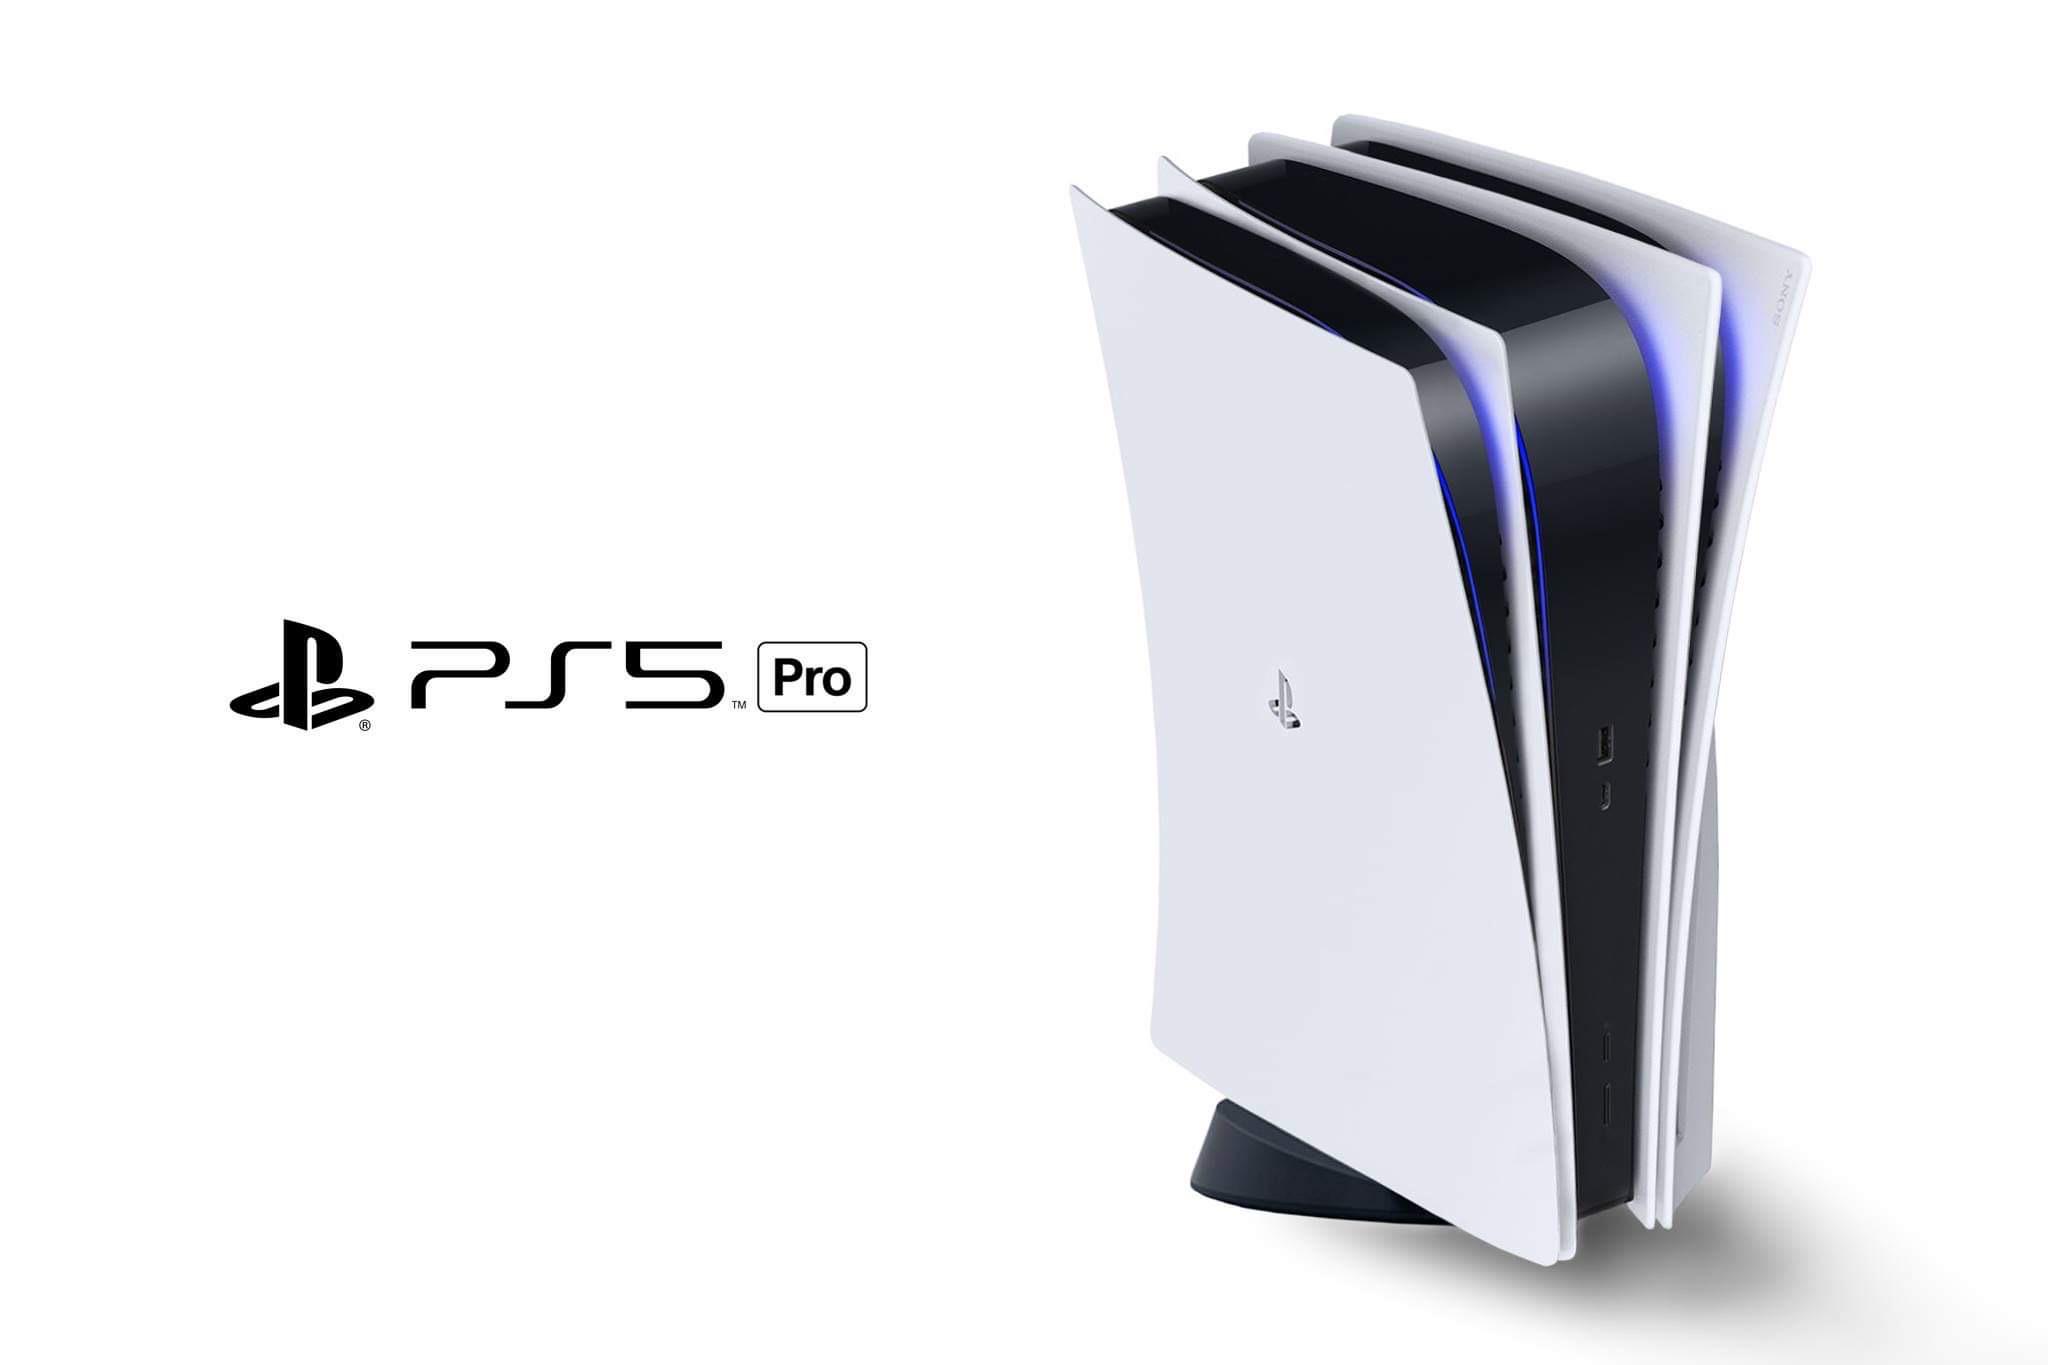 PS5 Pro Concept art